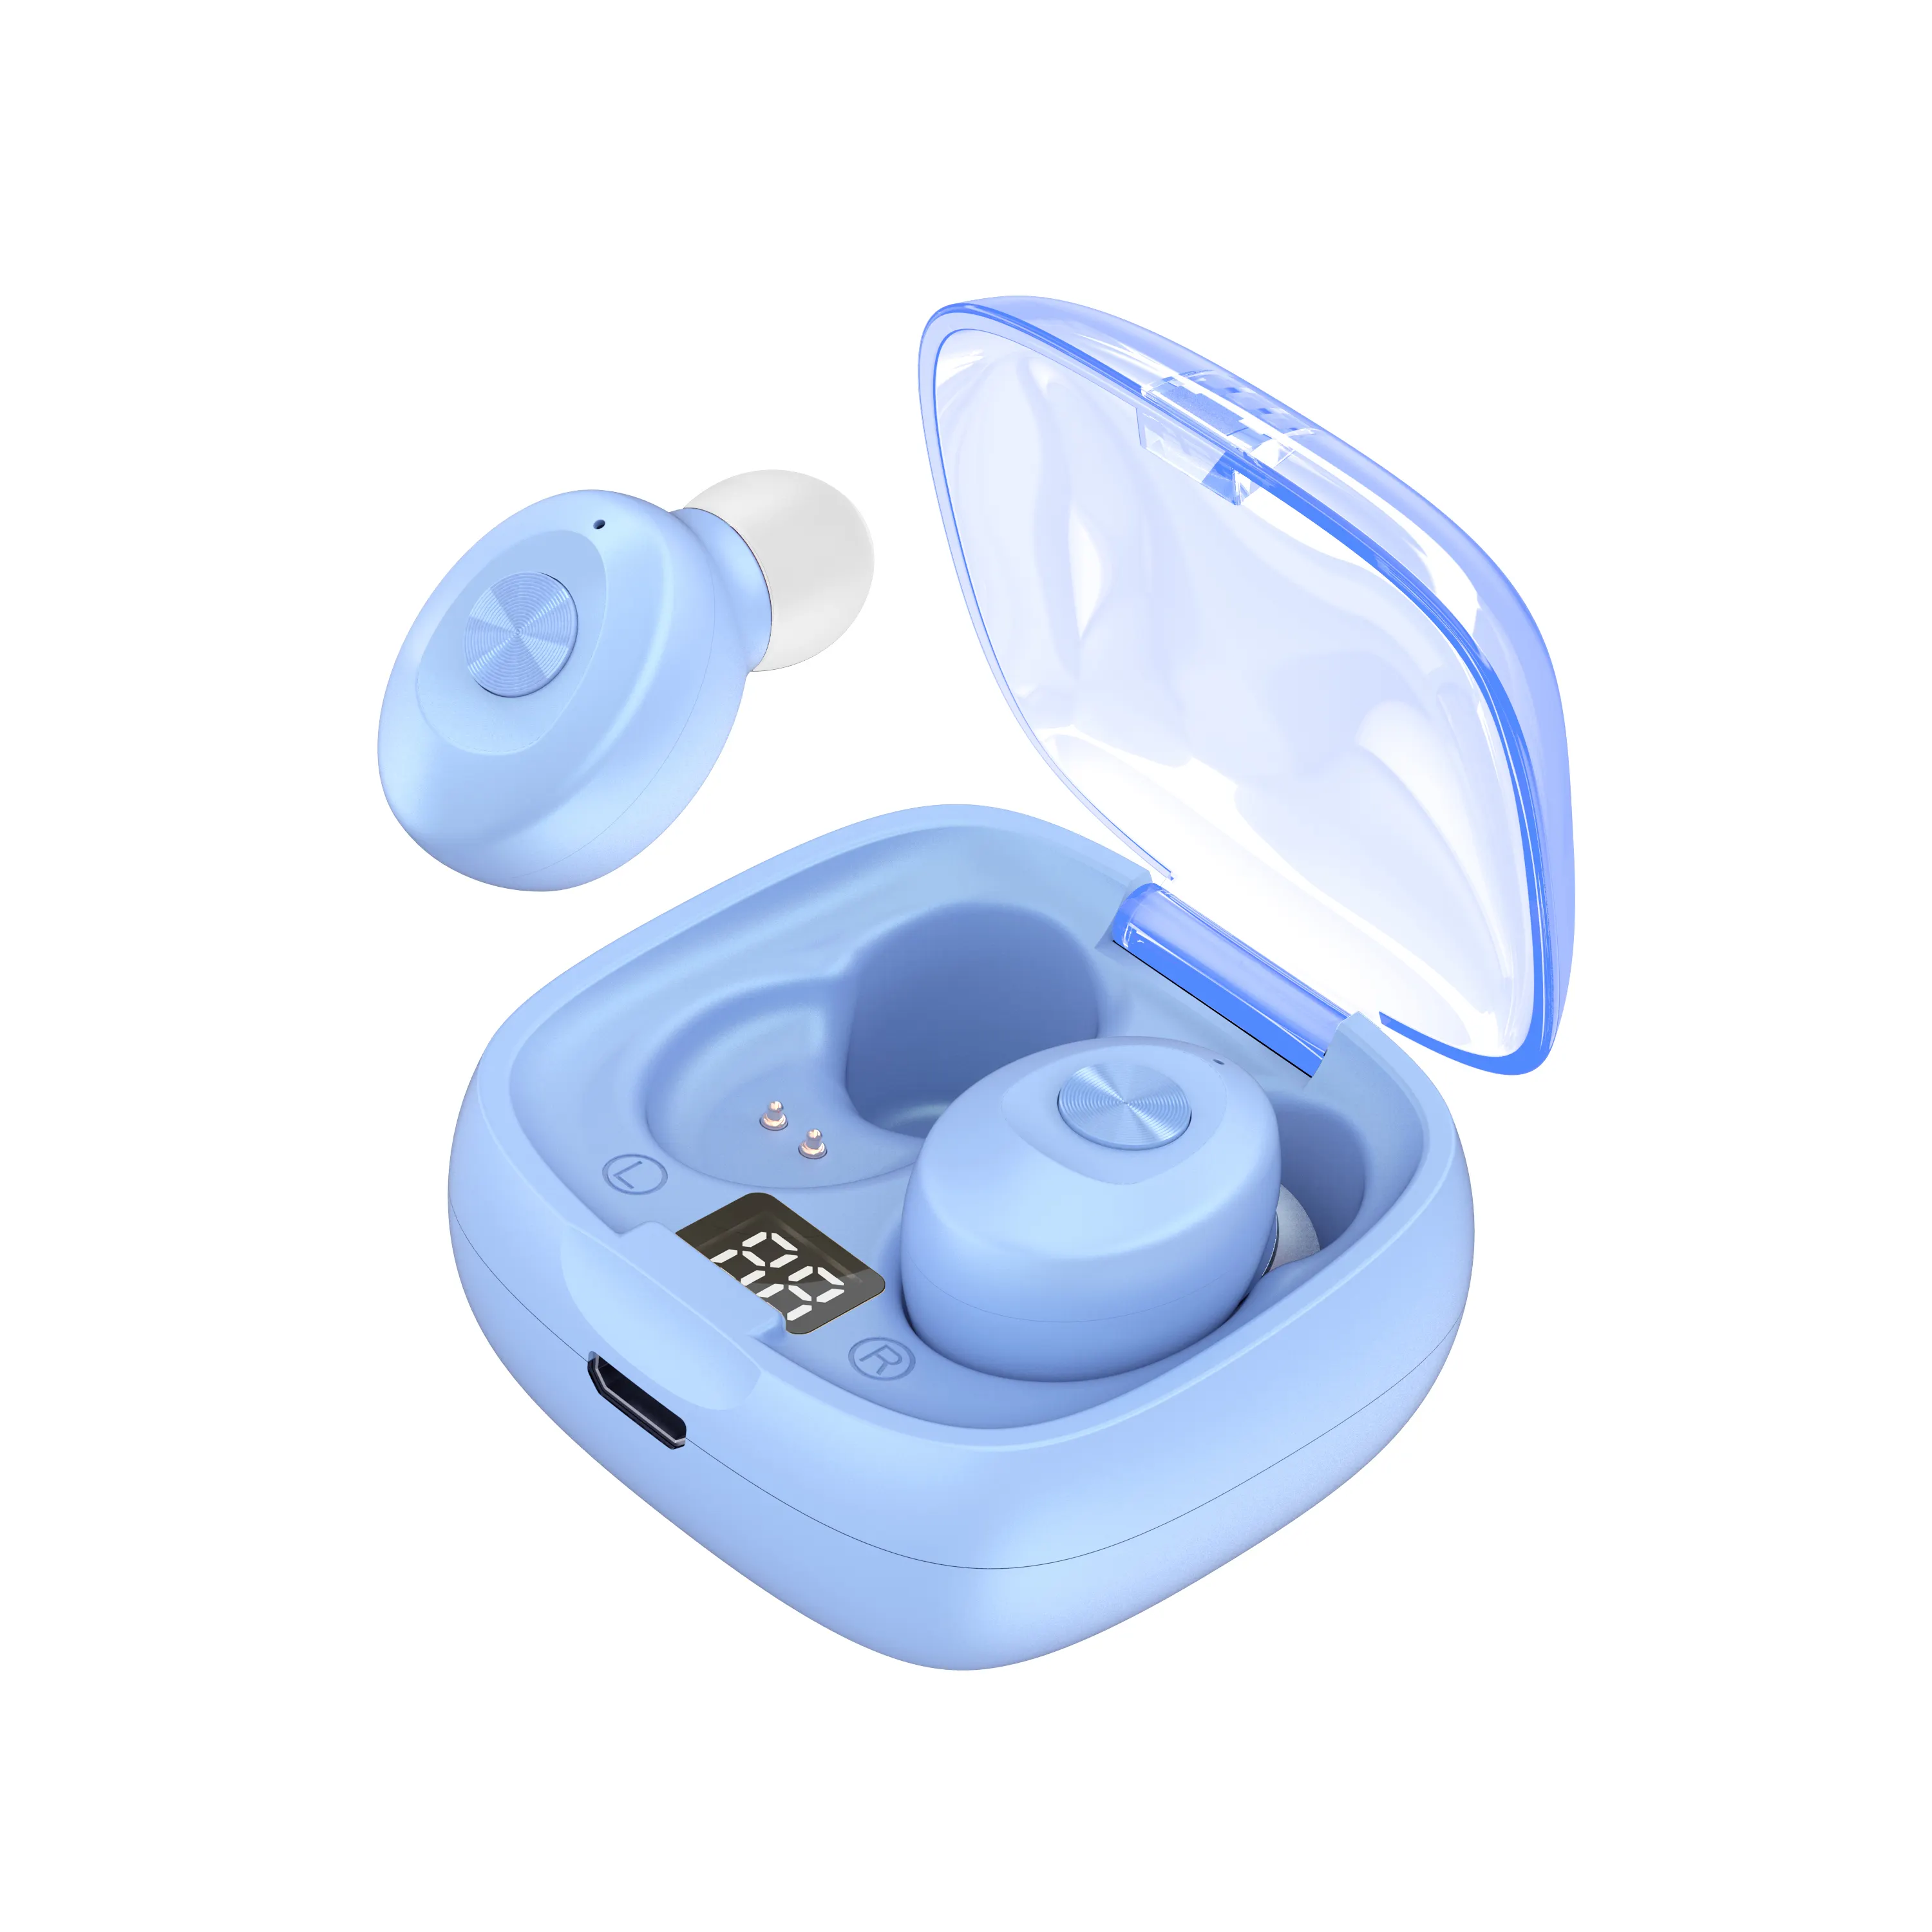 2021 Amazon top seller Noise Cancelling cuffie XG-8, Bluetooth 5.0 TWS auricolari auricolari con il mic